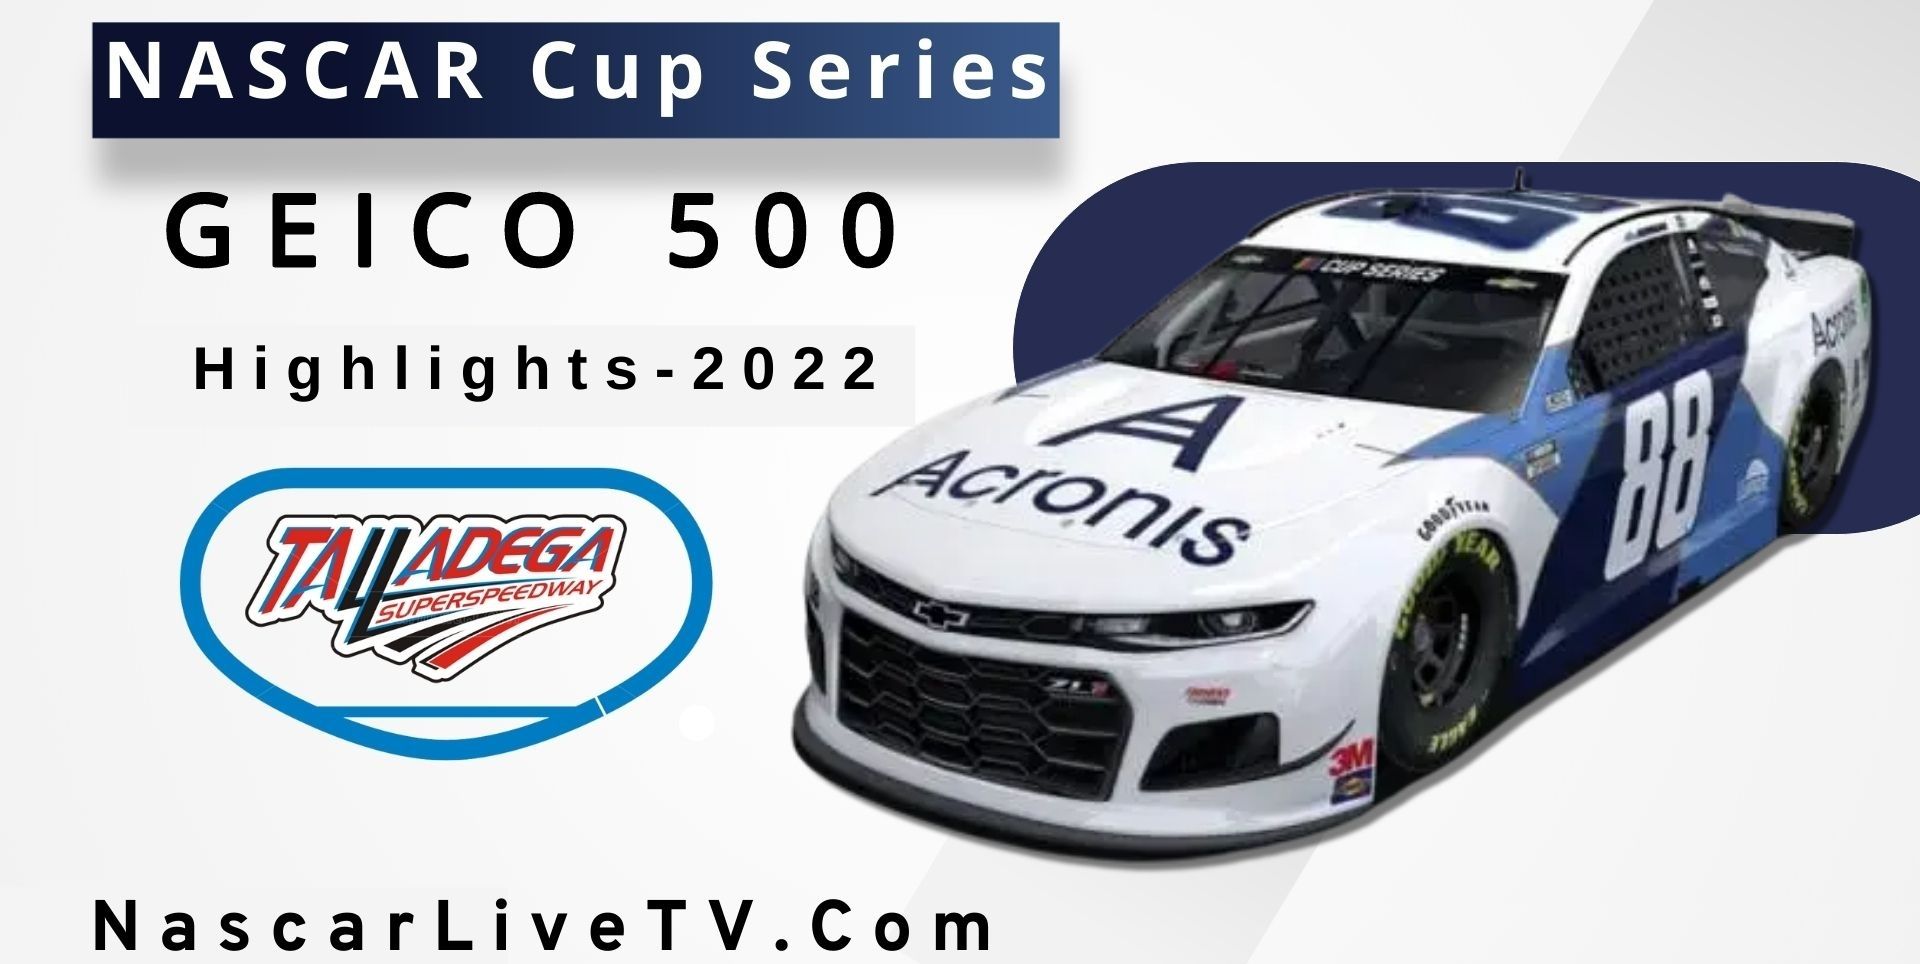 GEICO 500 Highlights NASCAR Cup Series 2022